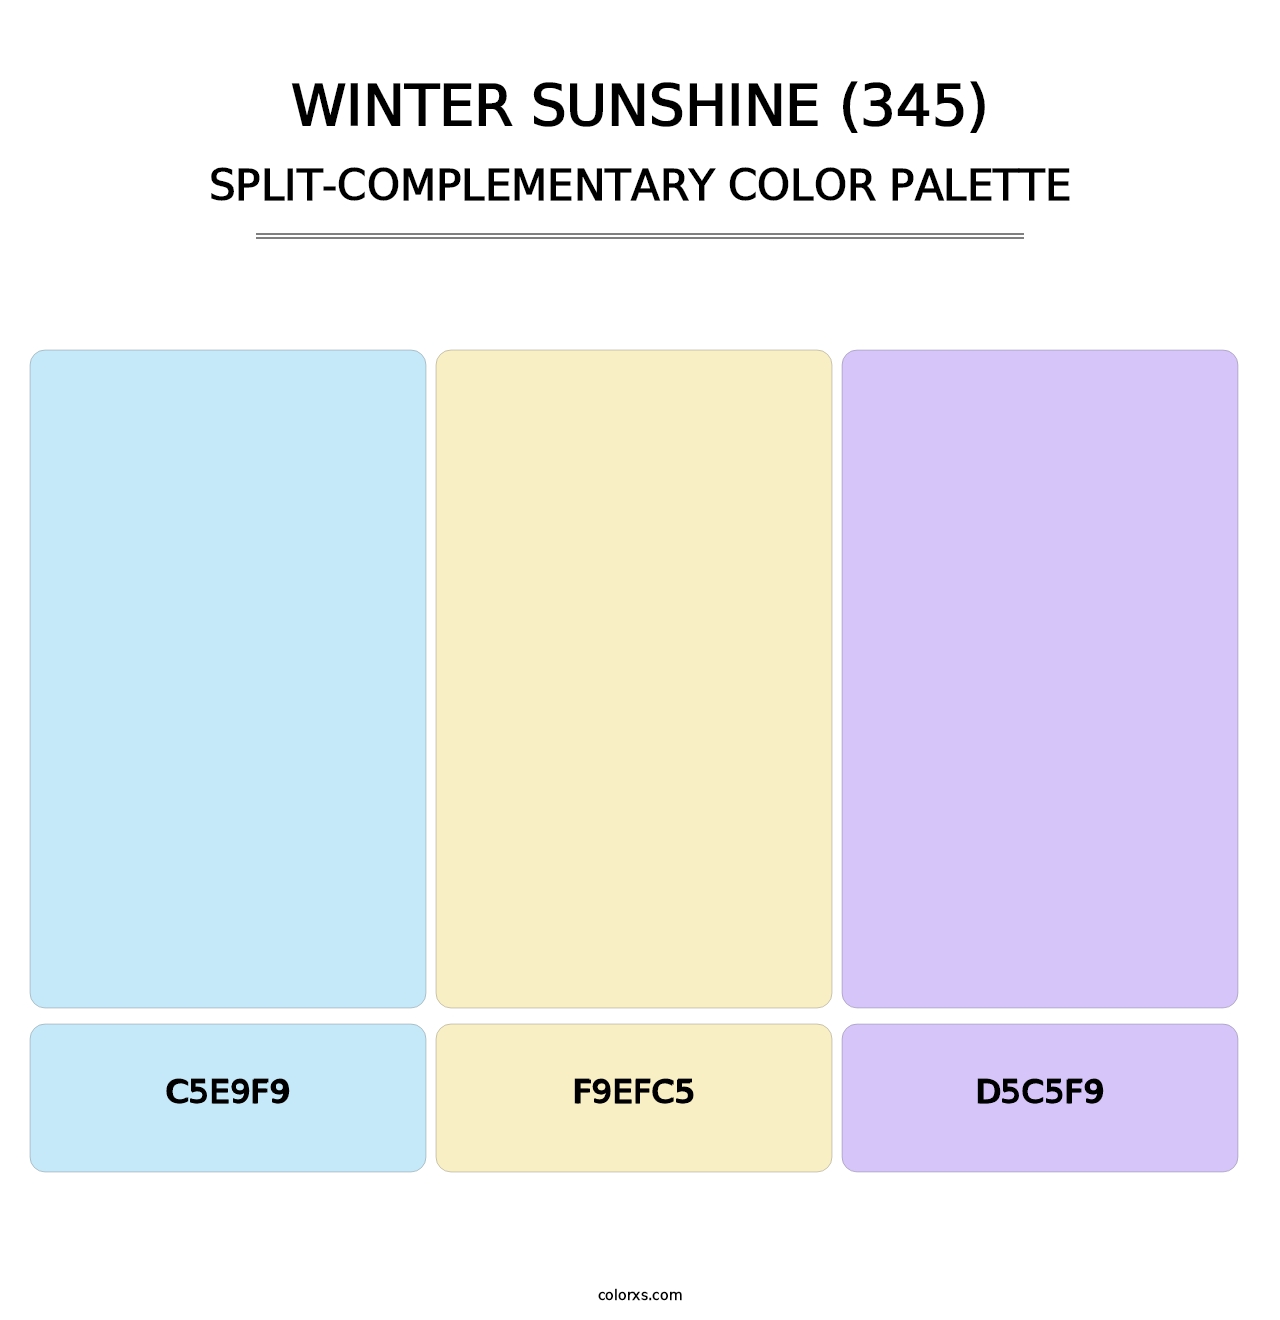 Winter Sunshine (345) - Split-Complementary Color Palette